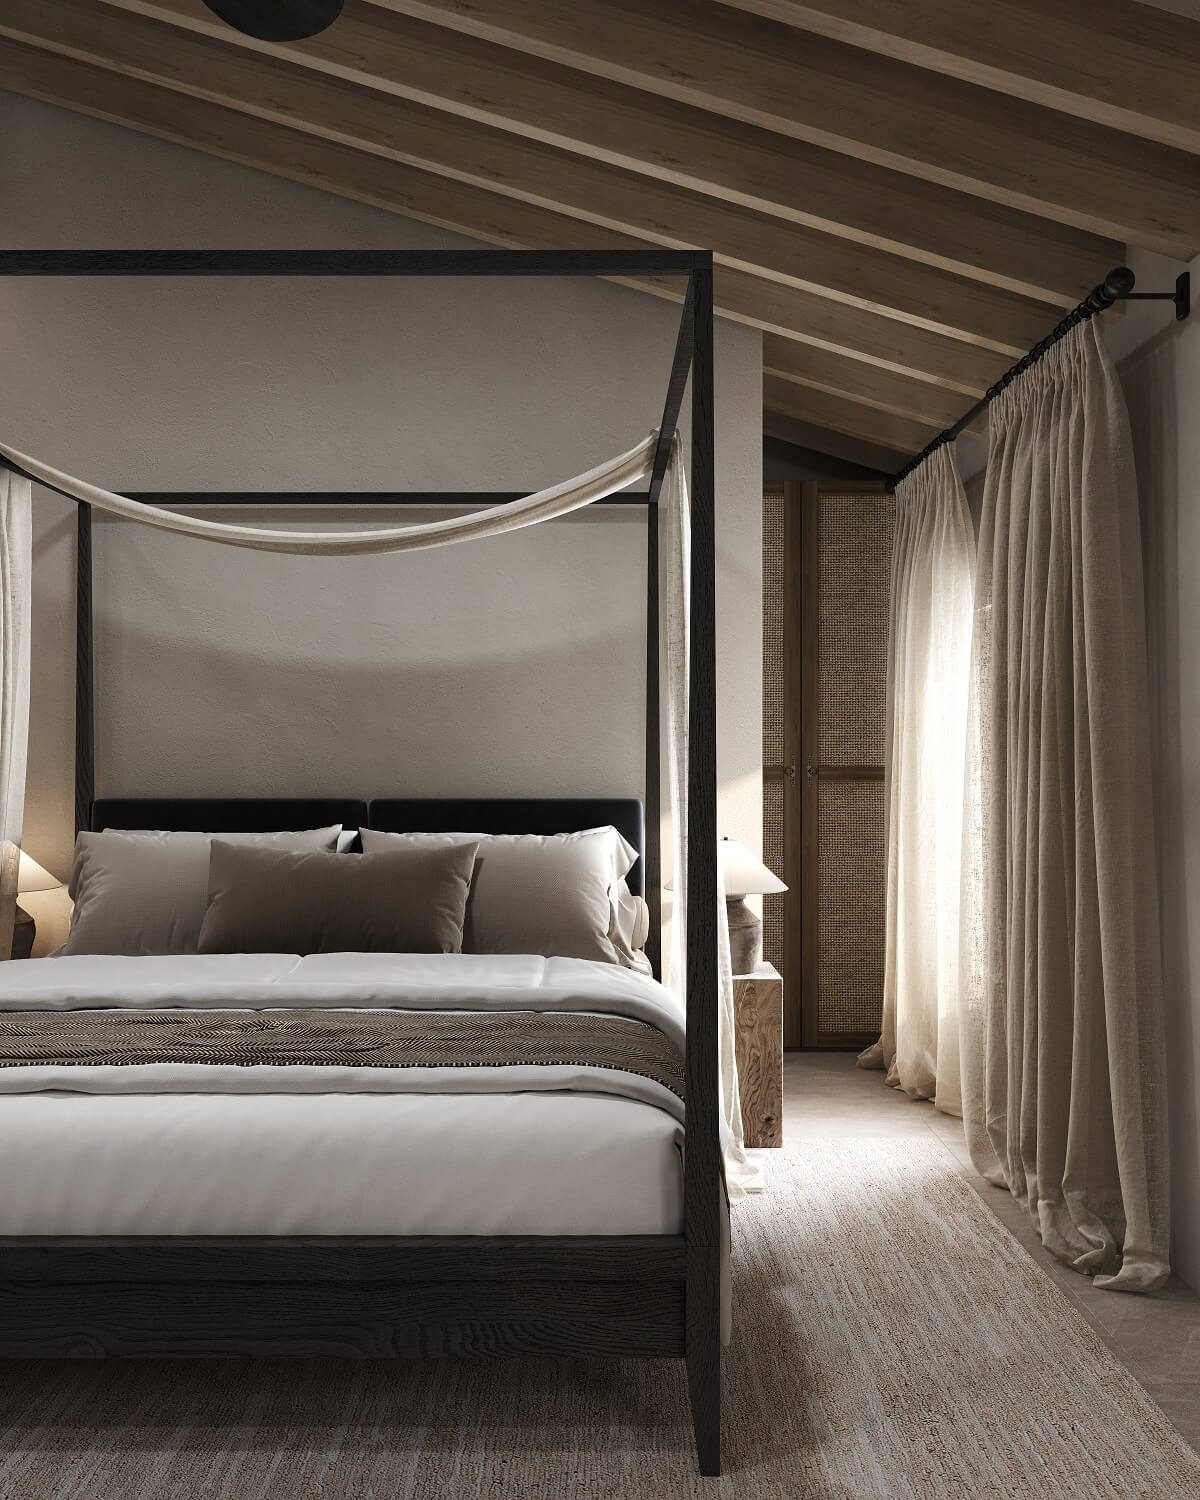 master-bedroom-canopyvbed-slanted-ceiling-wooden-beams-nordroom